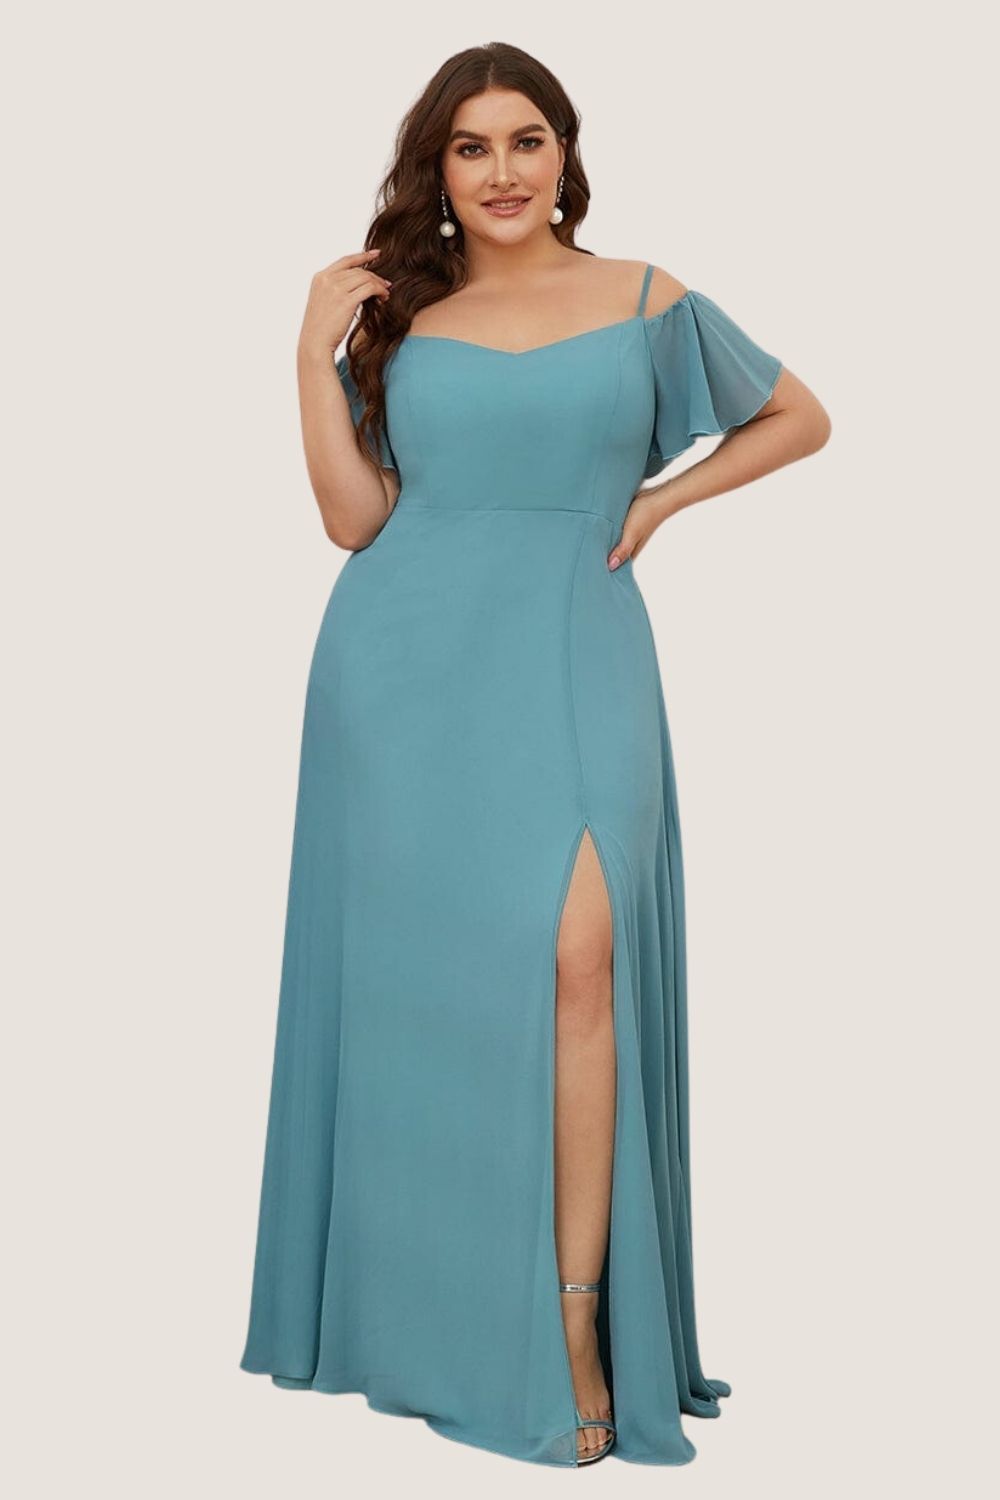 Amanda Seaglass Blue Bridesmaid Dress by Dressology